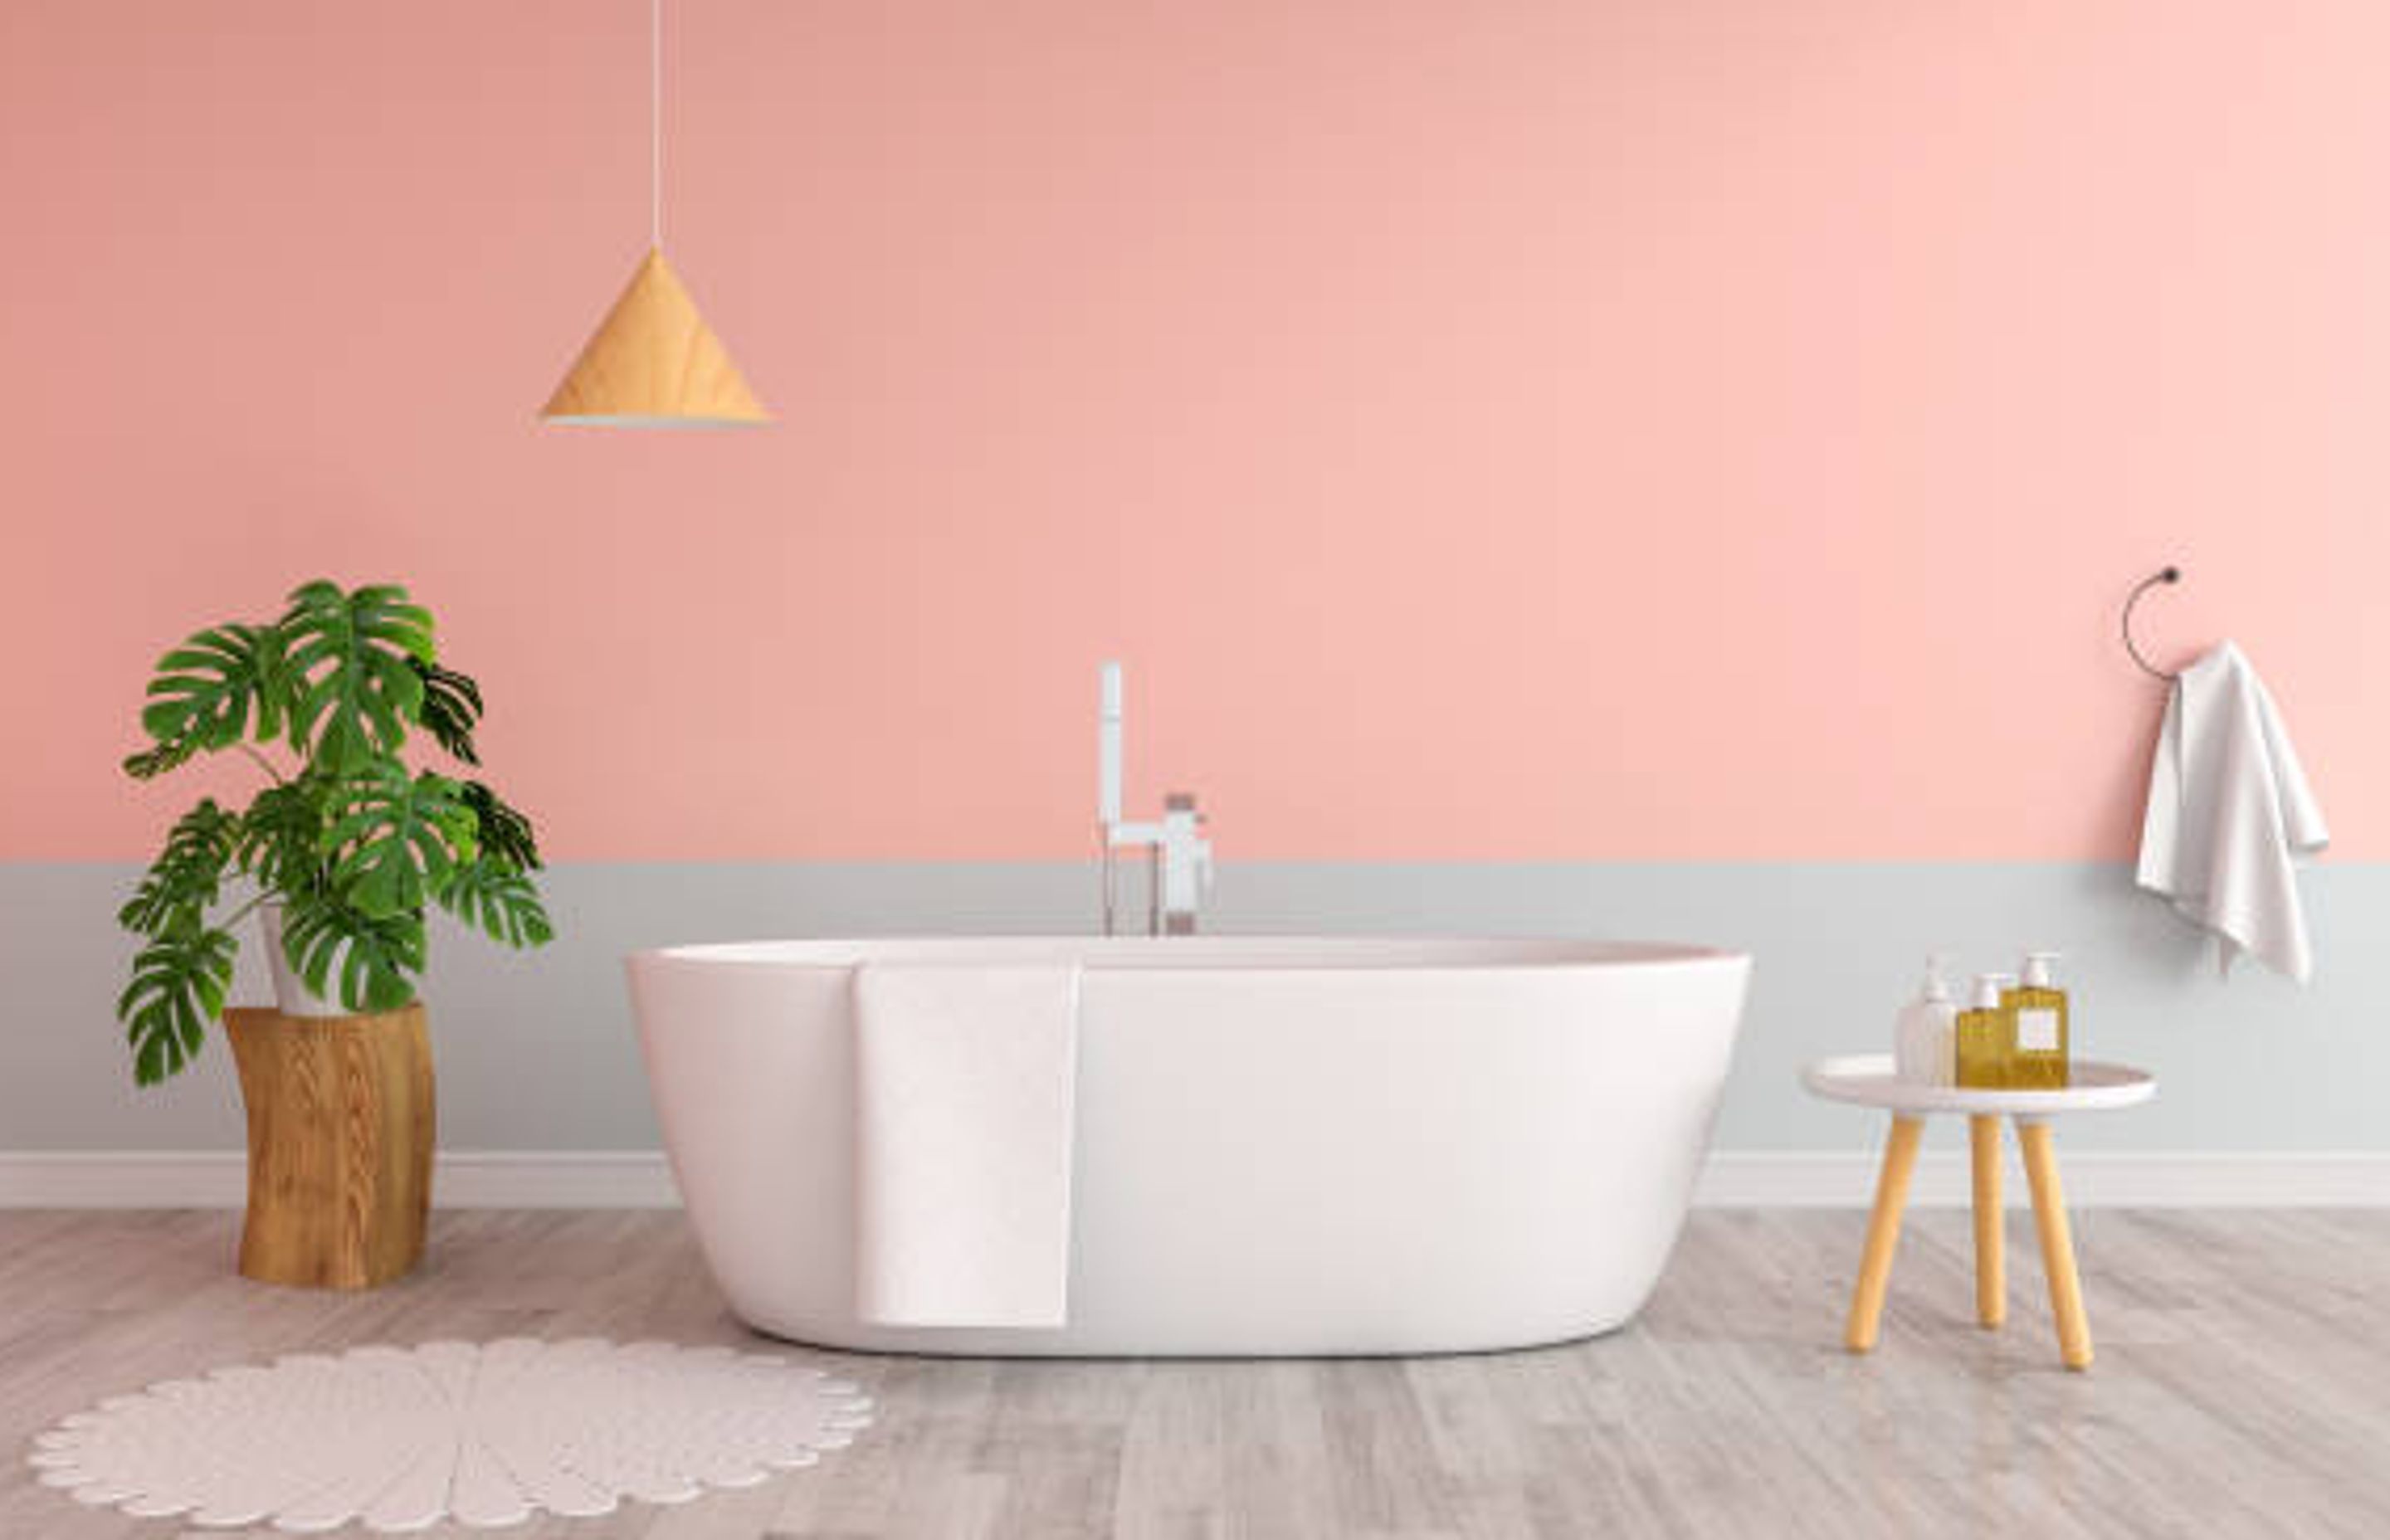 Example of using pastel tones in bathroom | Photo Credit - iStock